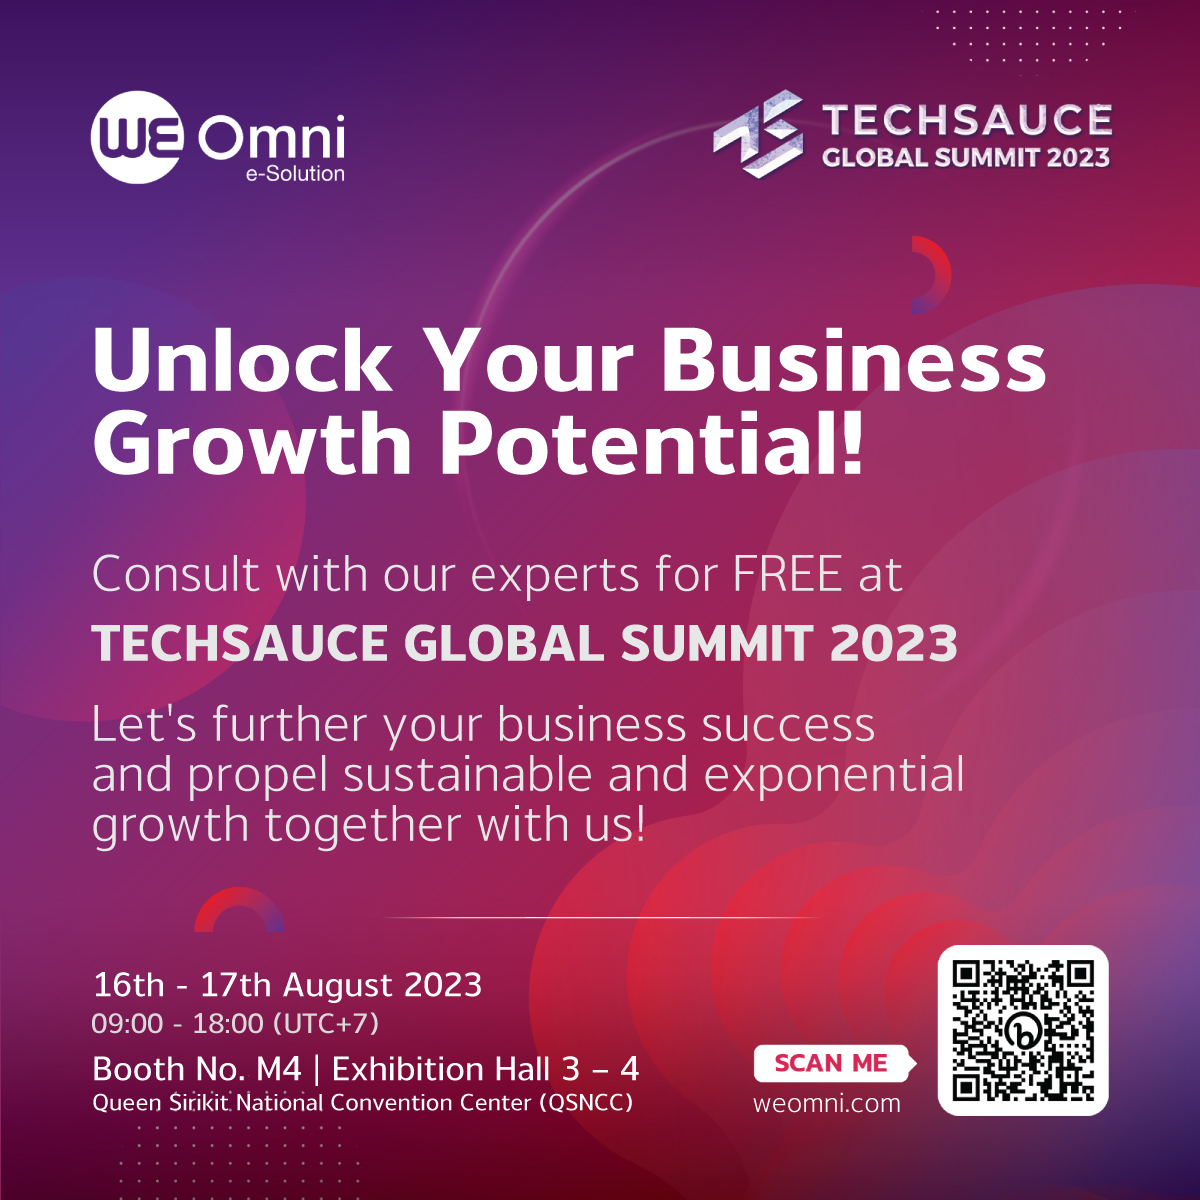 WeOmni ได้ร่วมเป็นพาร์ทเนอร์กับ Techsauce Global Summit 2023 งานประชุมด้านเทคโนโลยีระดับแนวหน้าของภูมิภาคเอเชียตะวันออกเฉียงใต้